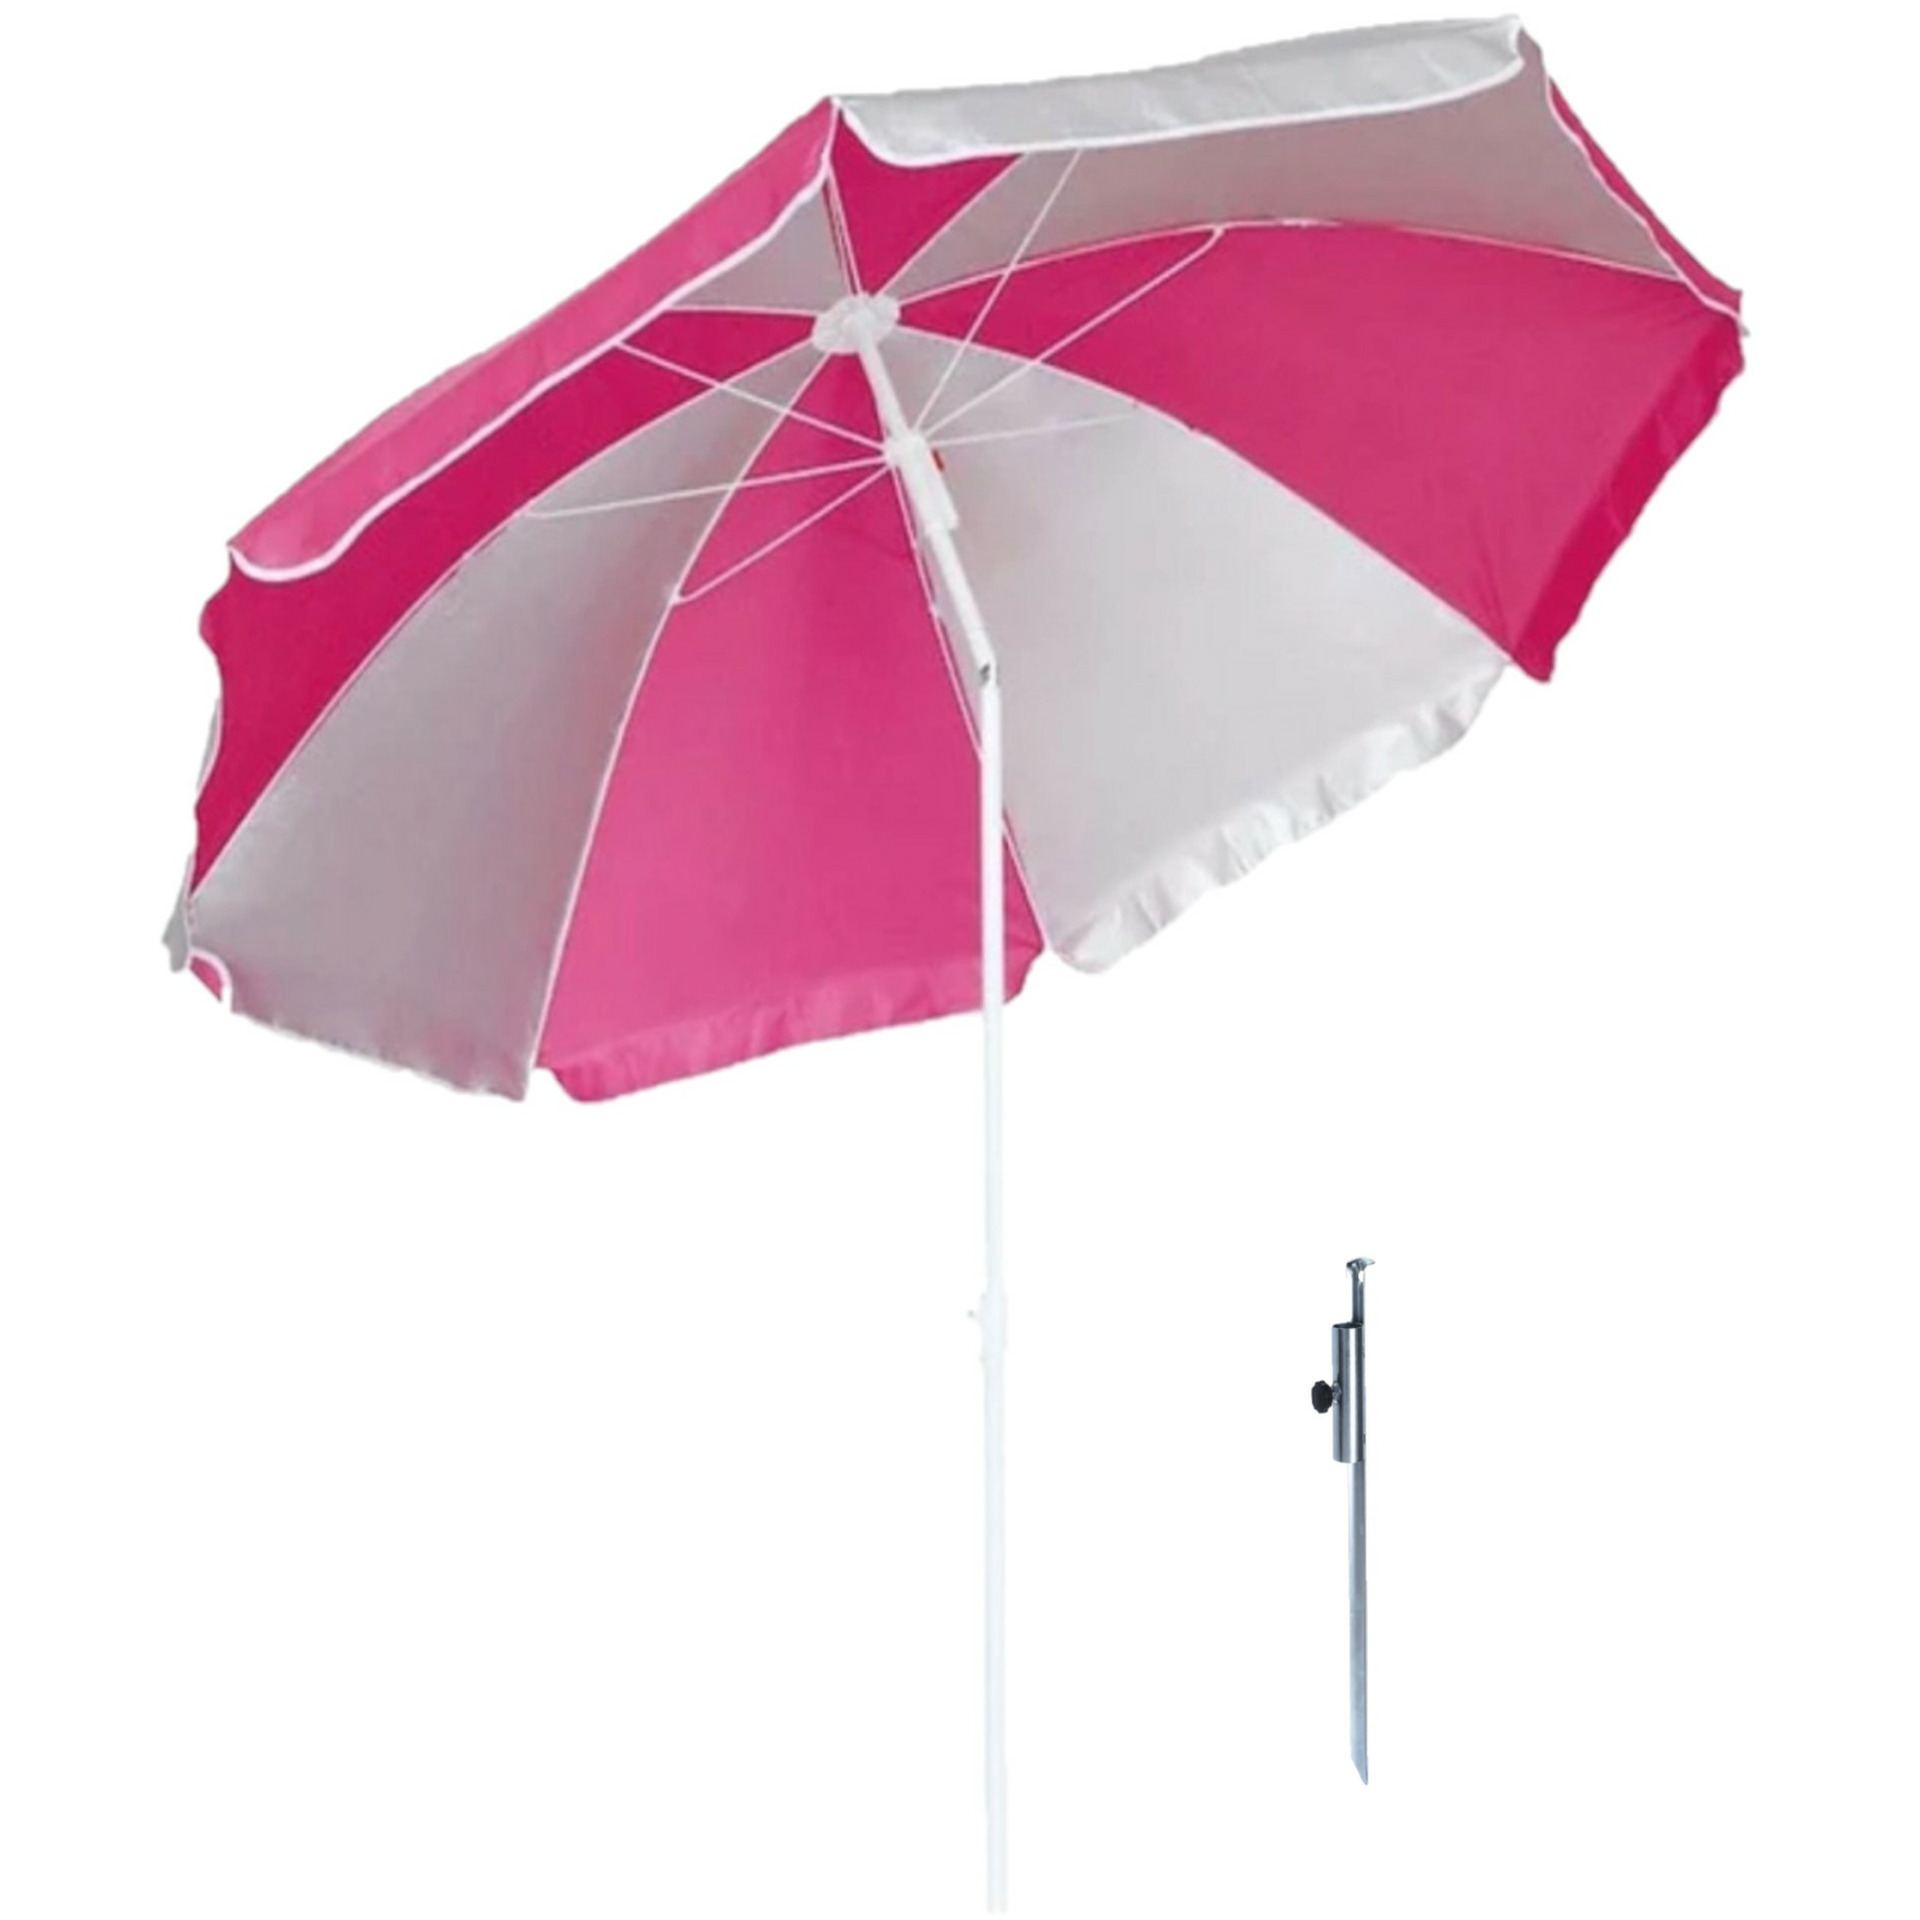 Merkloos Parasol - roze/wit - D120 cm - incl. draagtas - parasolharing - 49 cm -